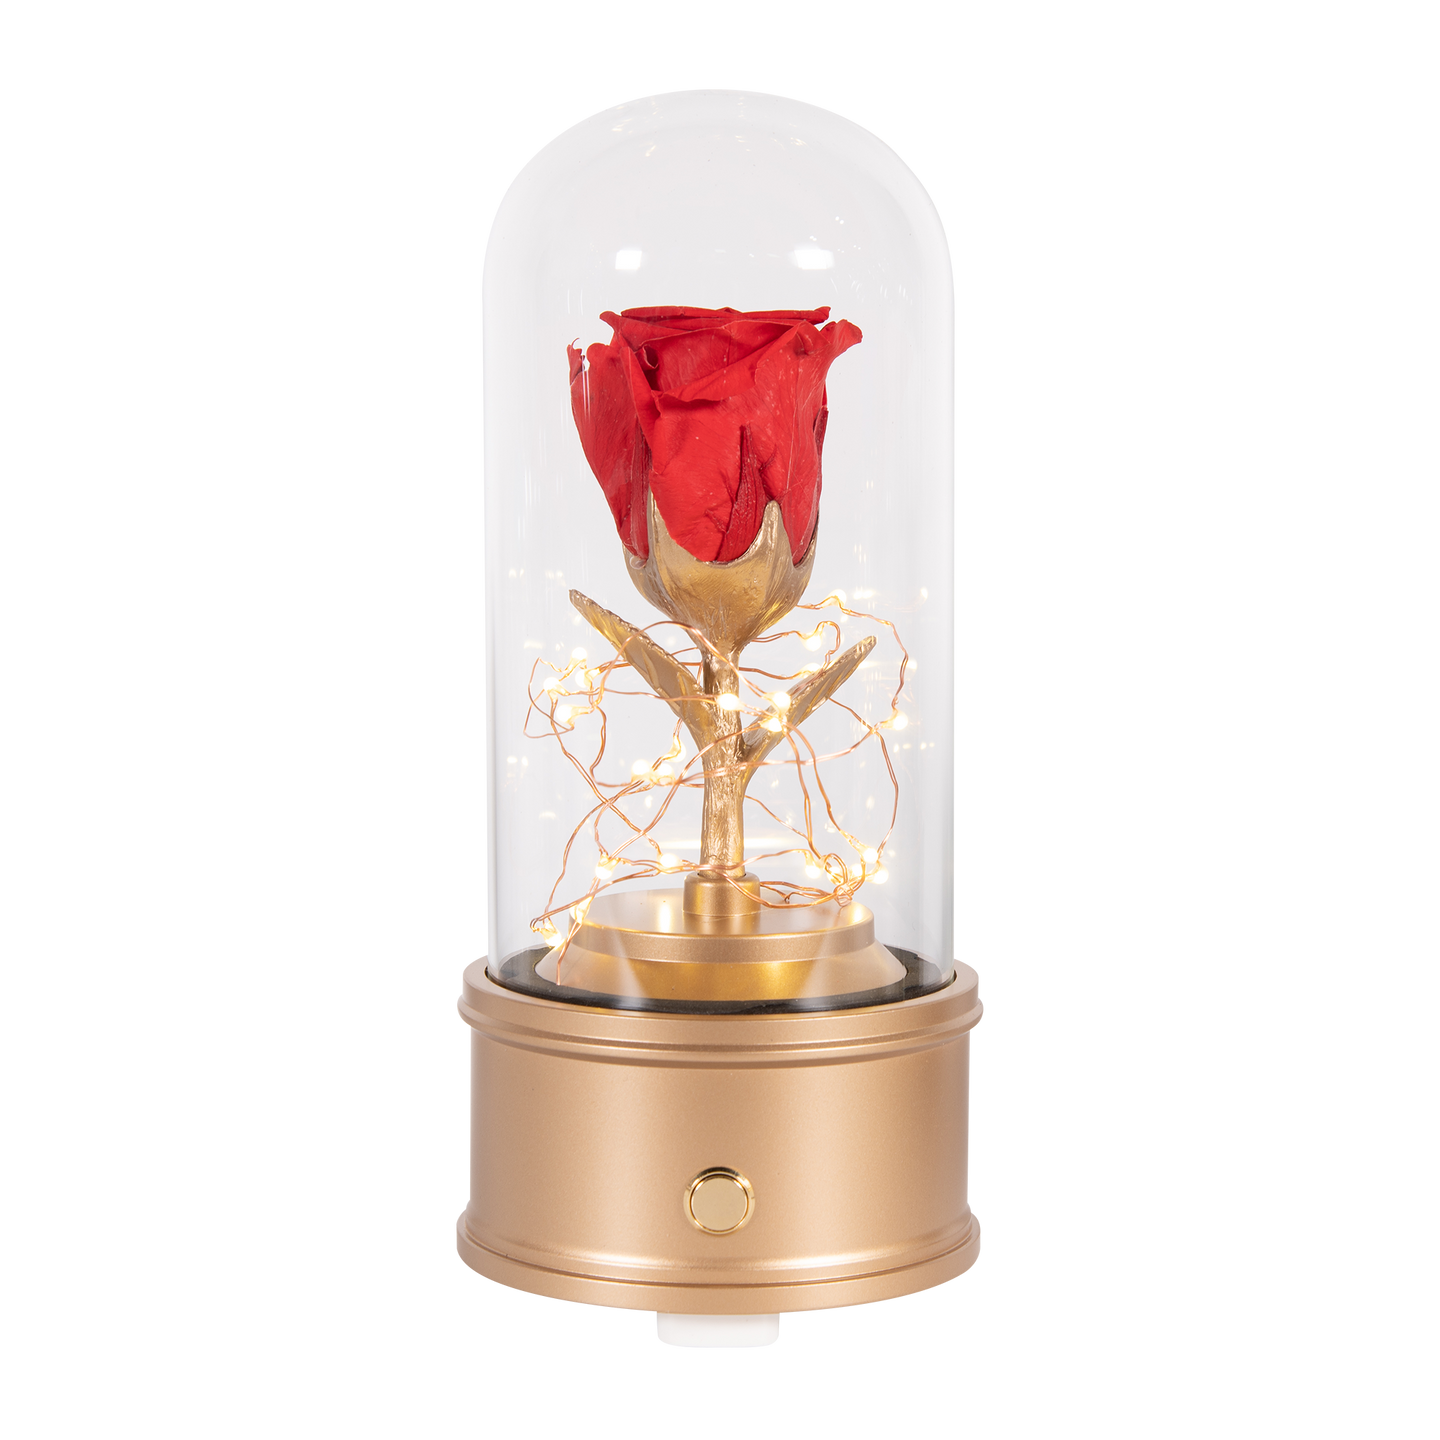 Enchanted Rose Bluetooth Speaker, Red Rose